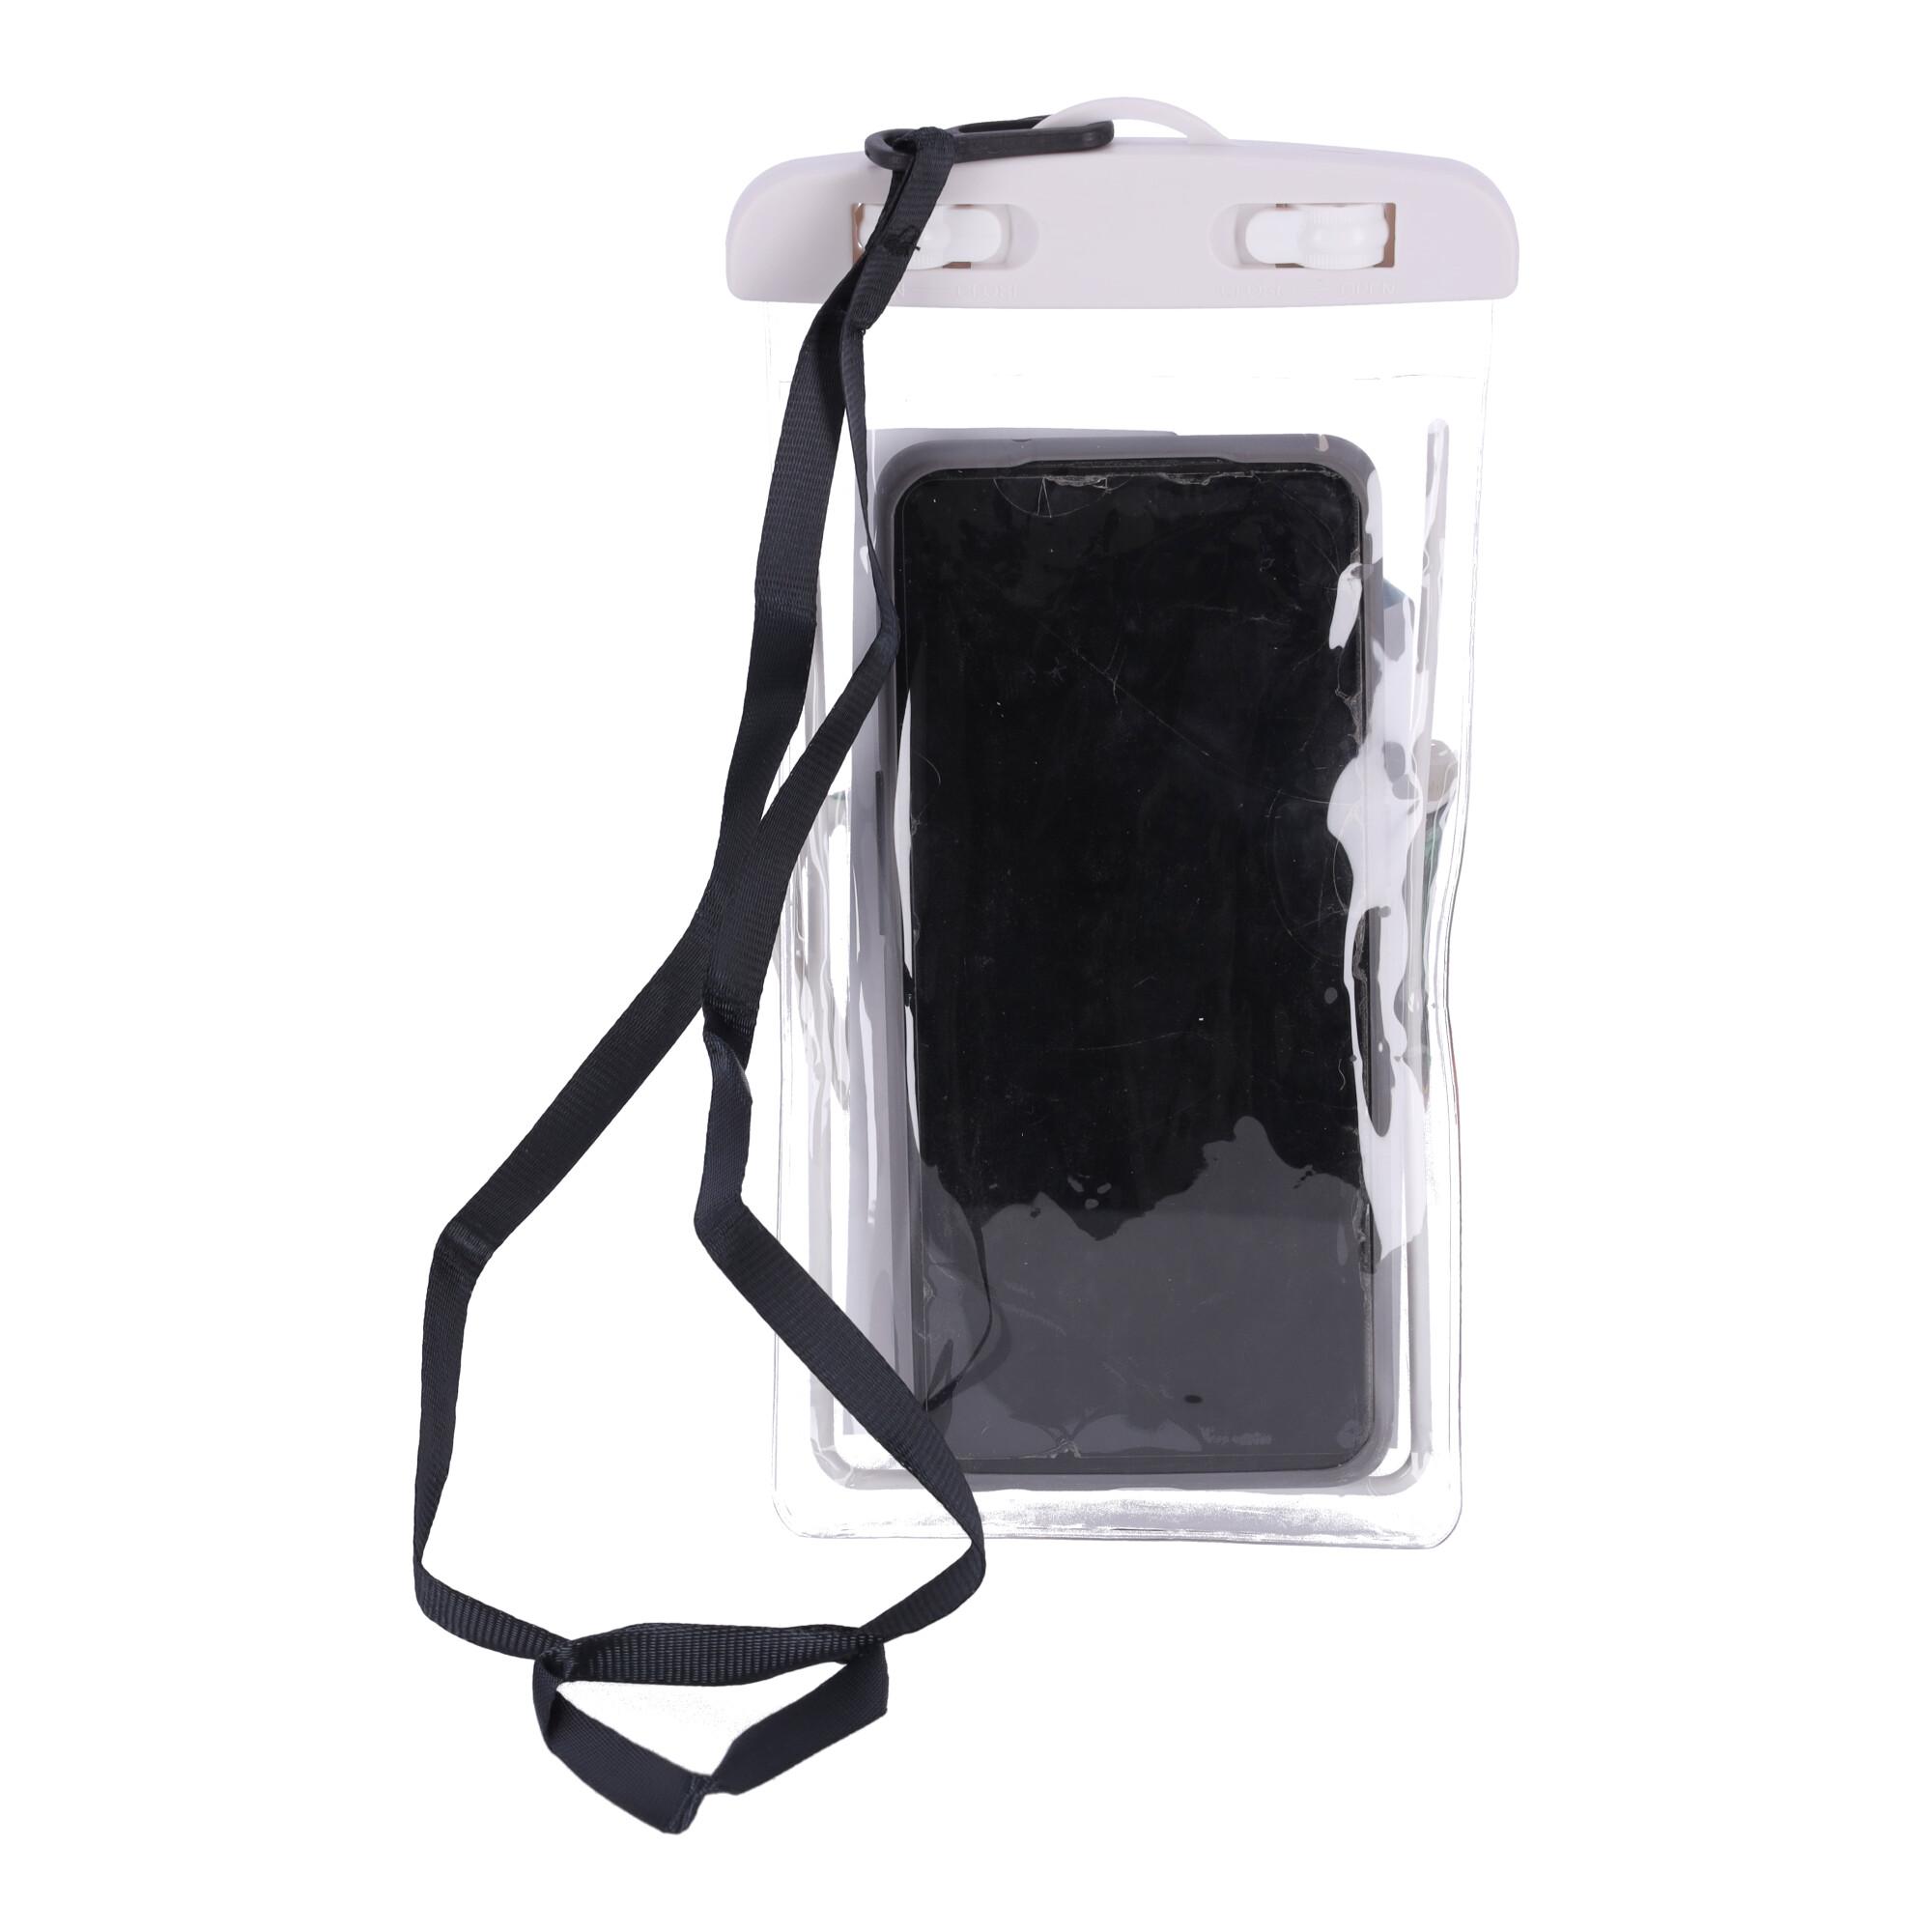 Waterproof universal case, phone cover - white